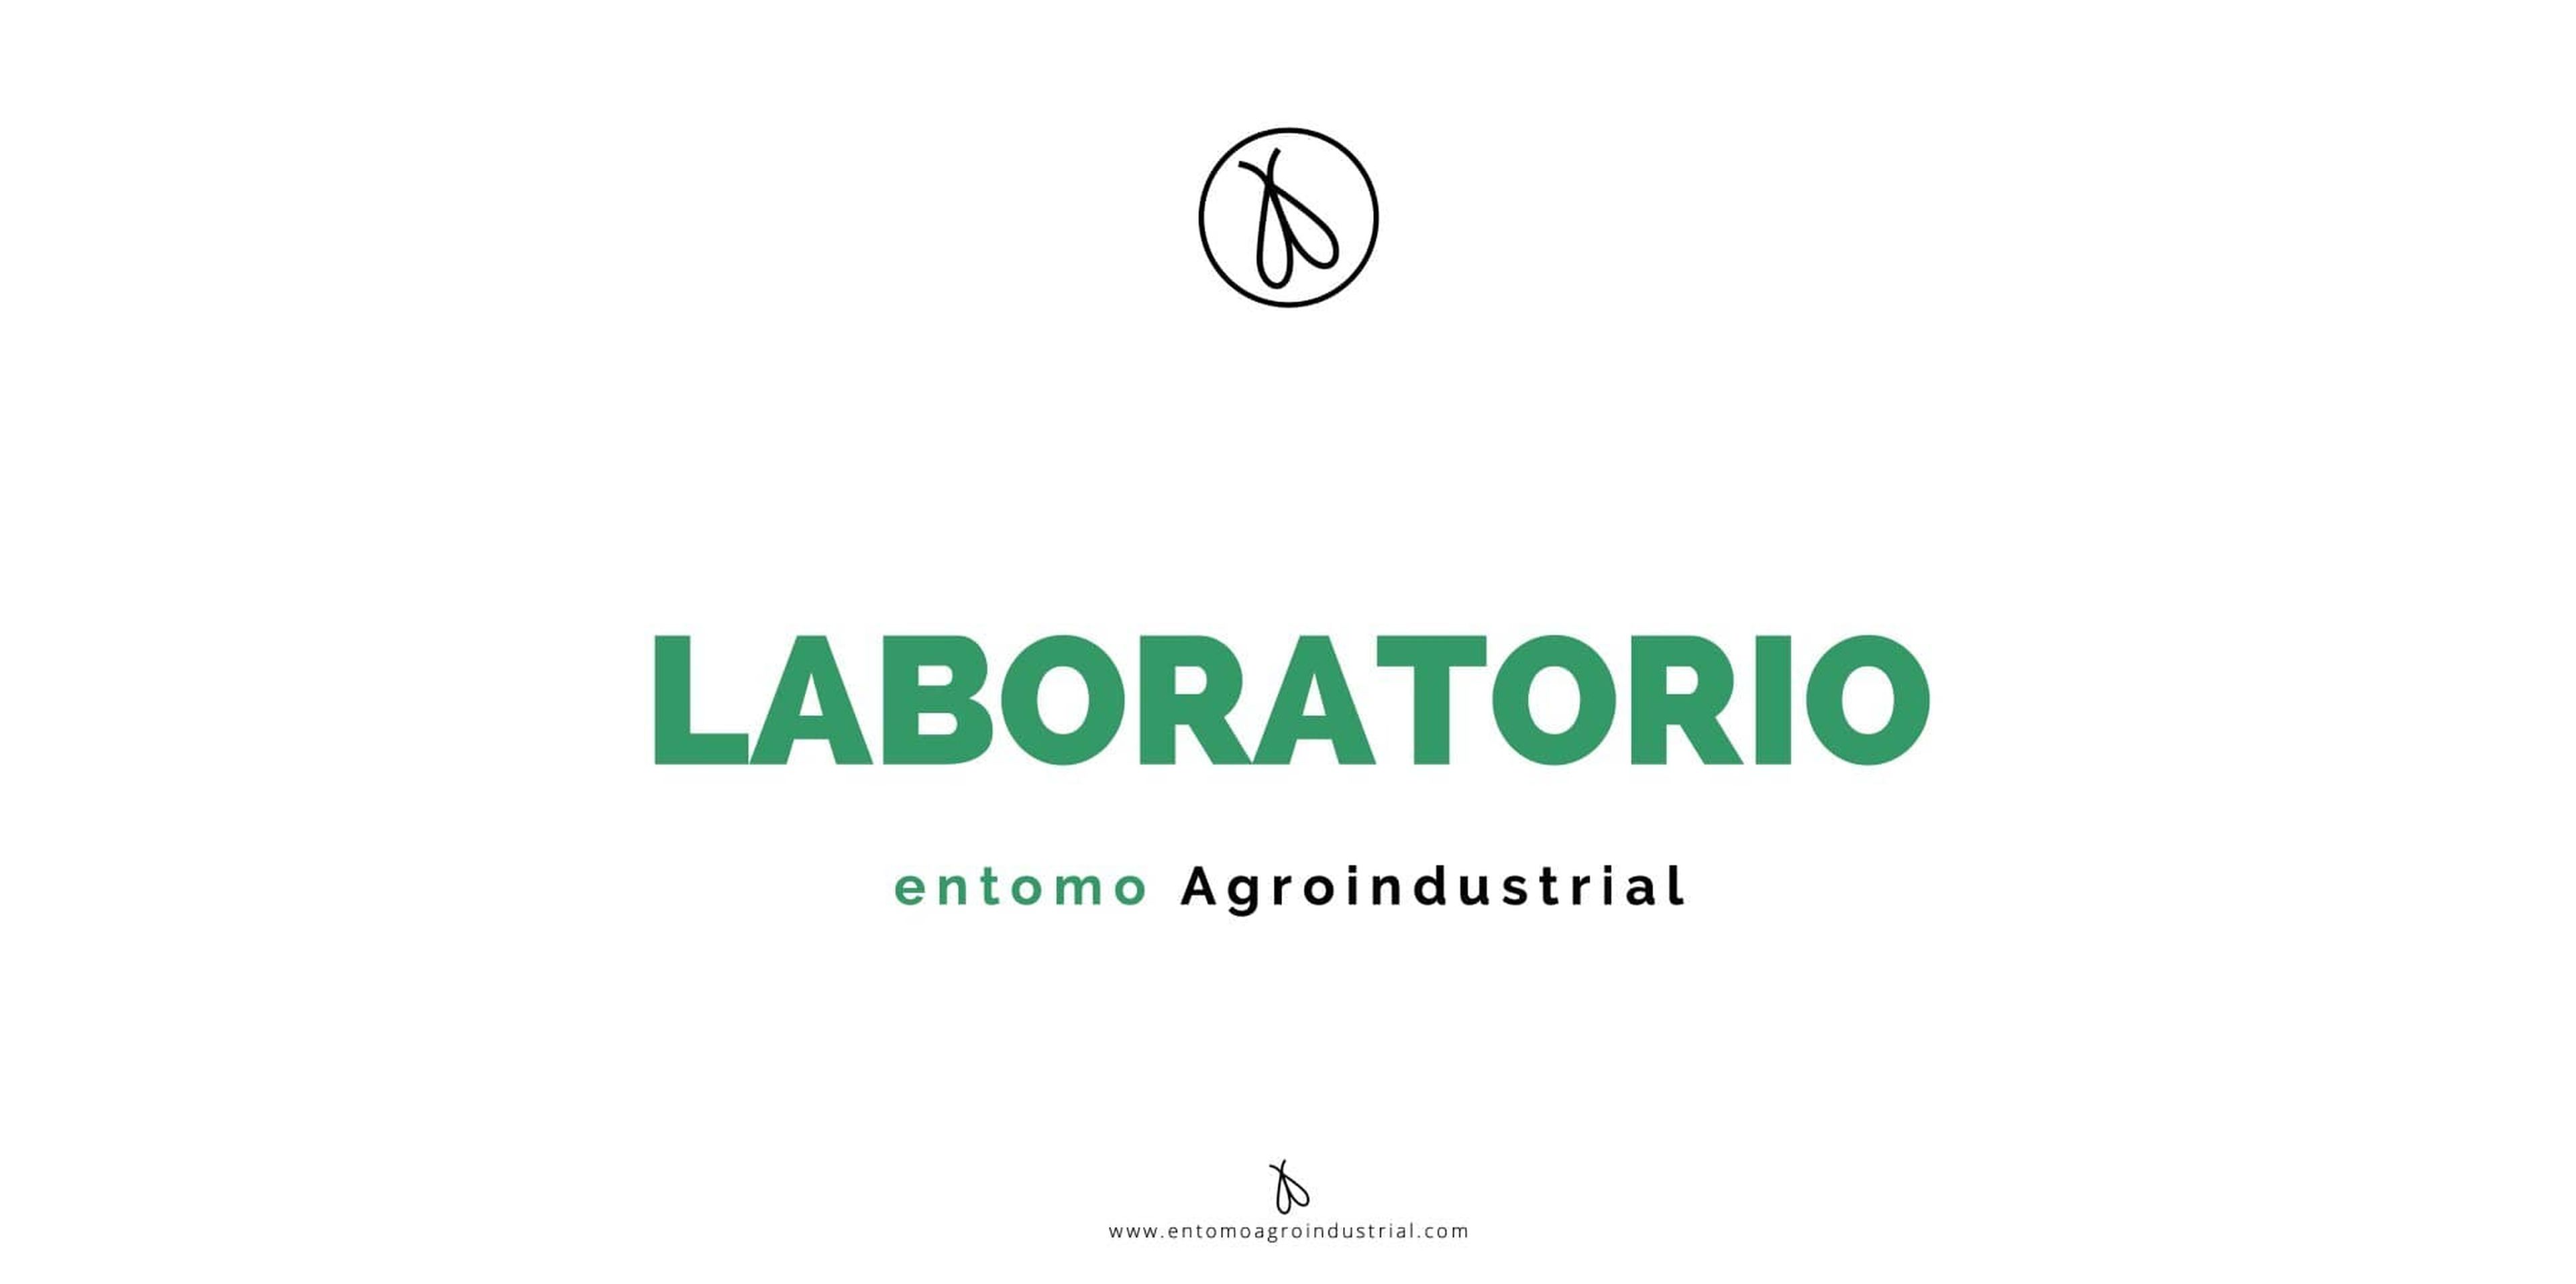 Entomo Agroindustrial